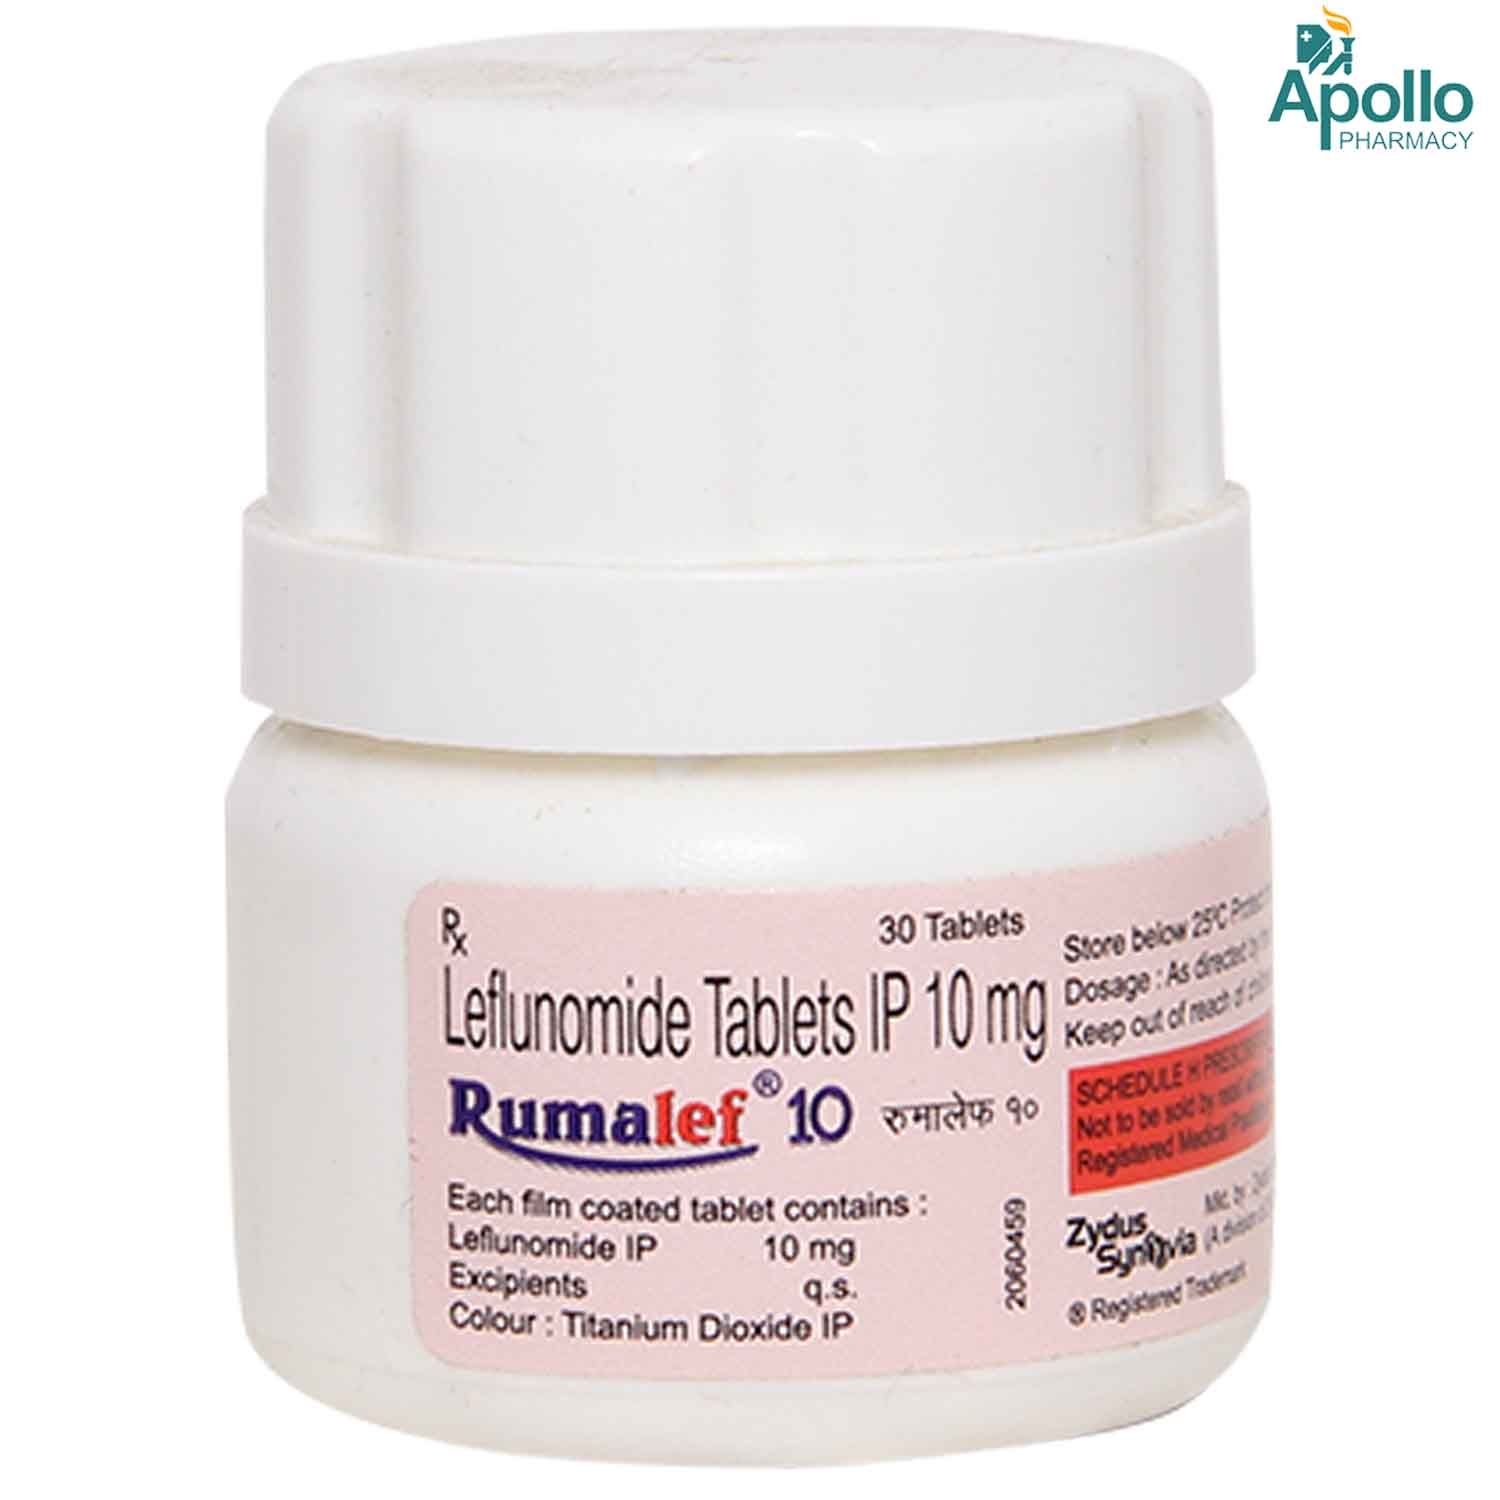 Buy Rumalef 10 Tablet 30's Online